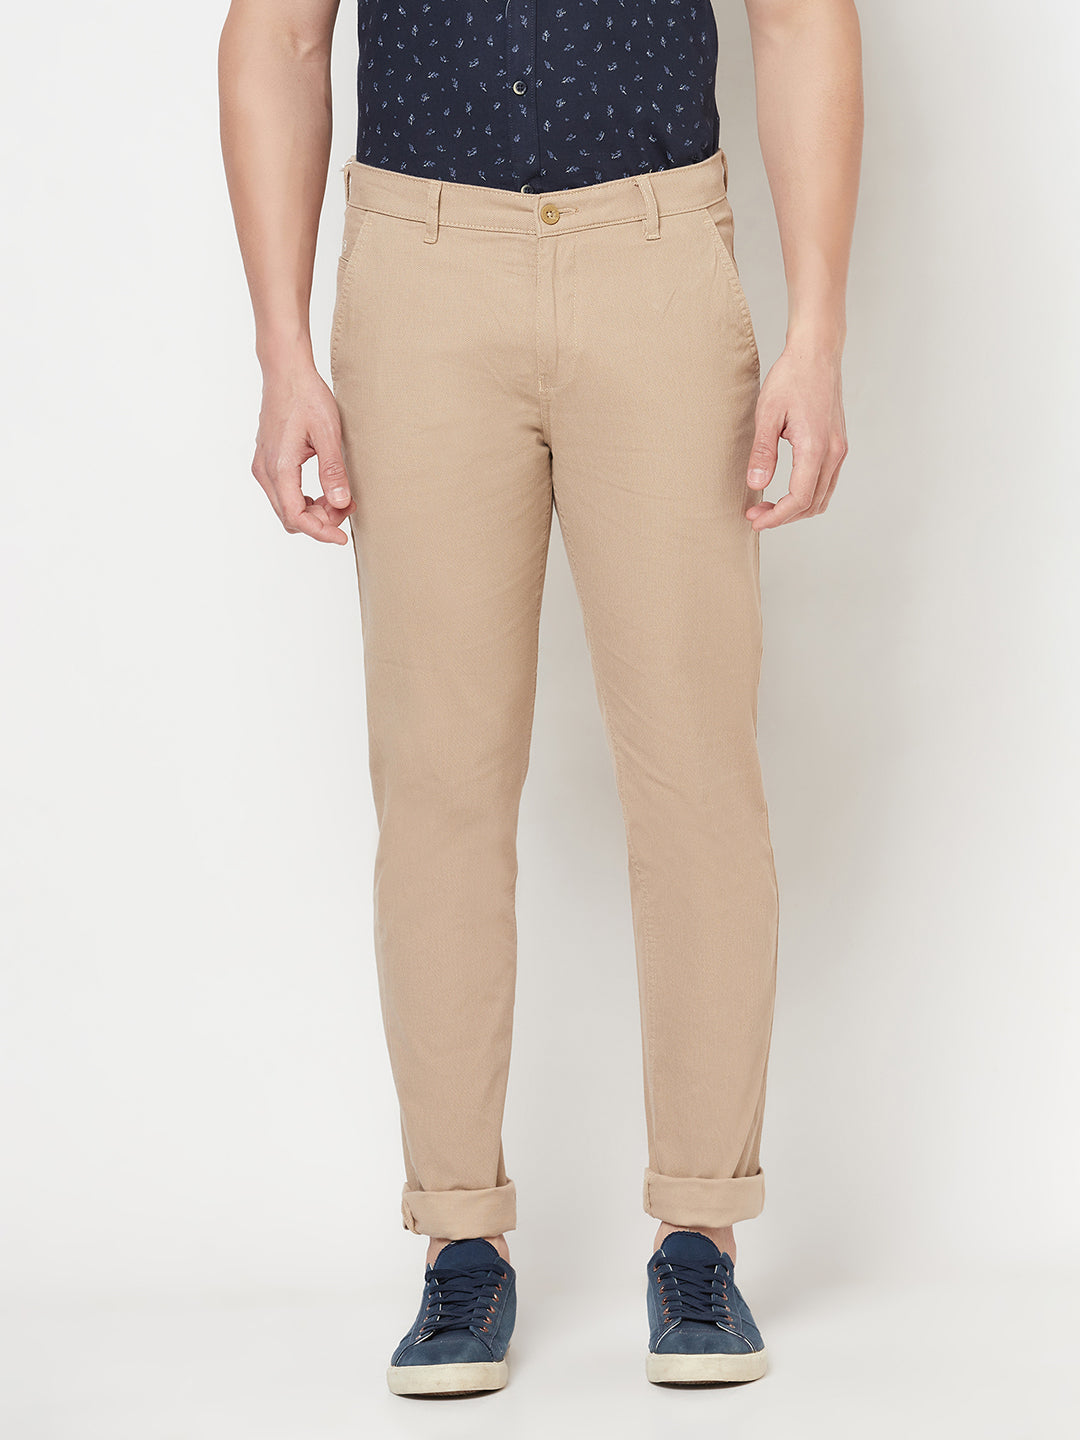 Beige Printed Trousers - Men Trousers